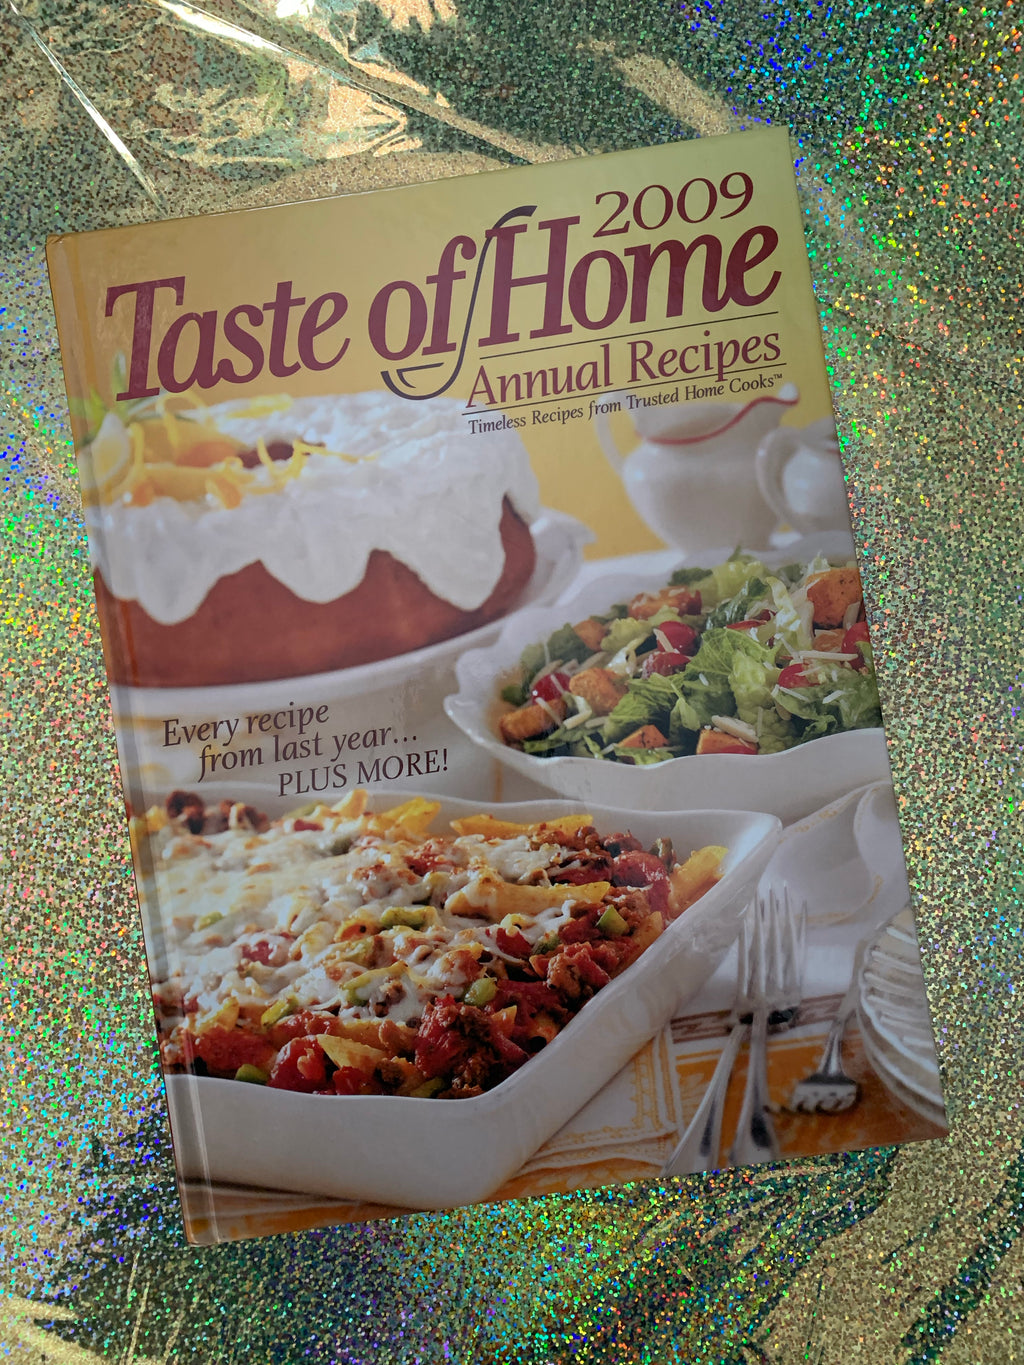 Taste of Home: Annual Recipes 2009